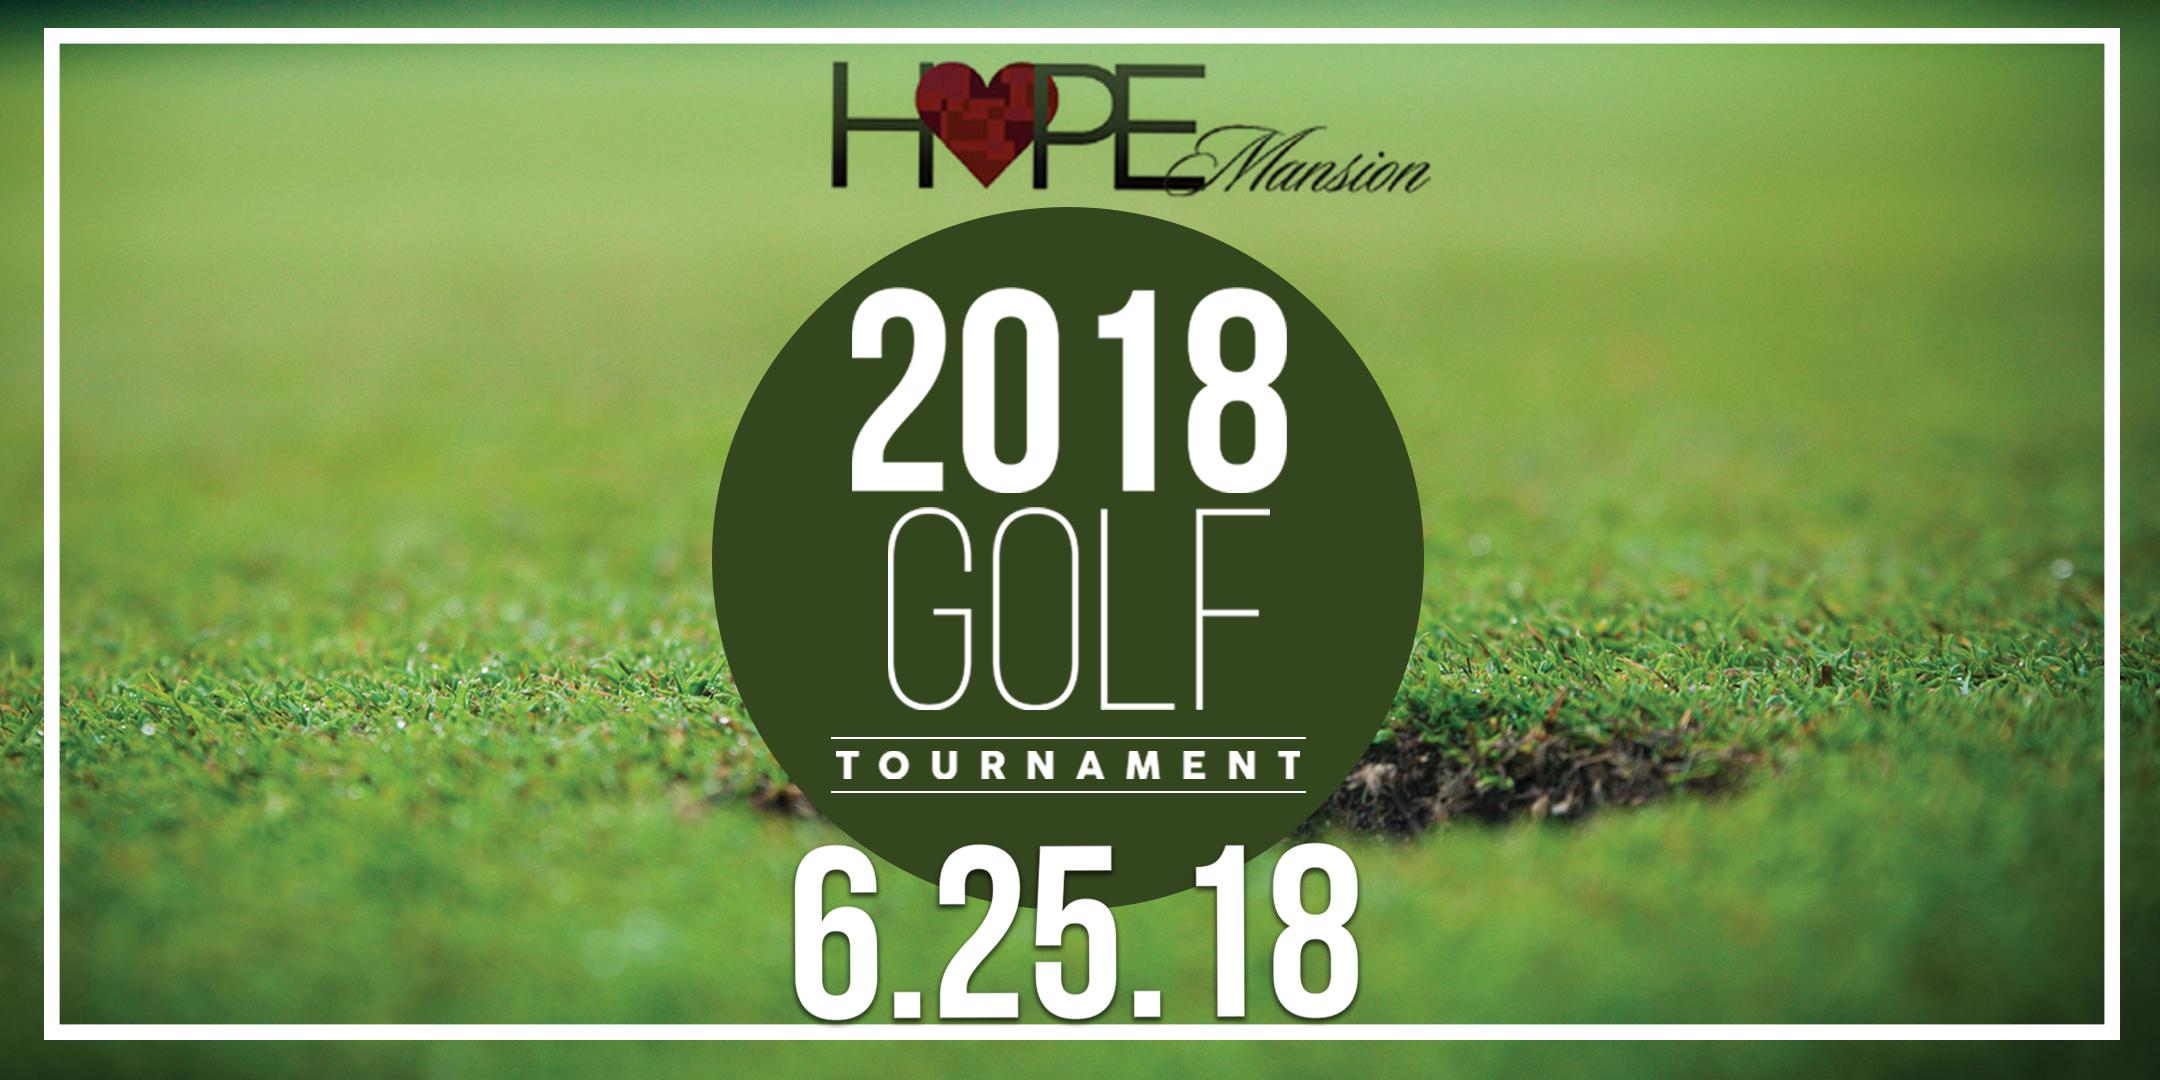 7th Annual Hope Mansion Golf Tournament